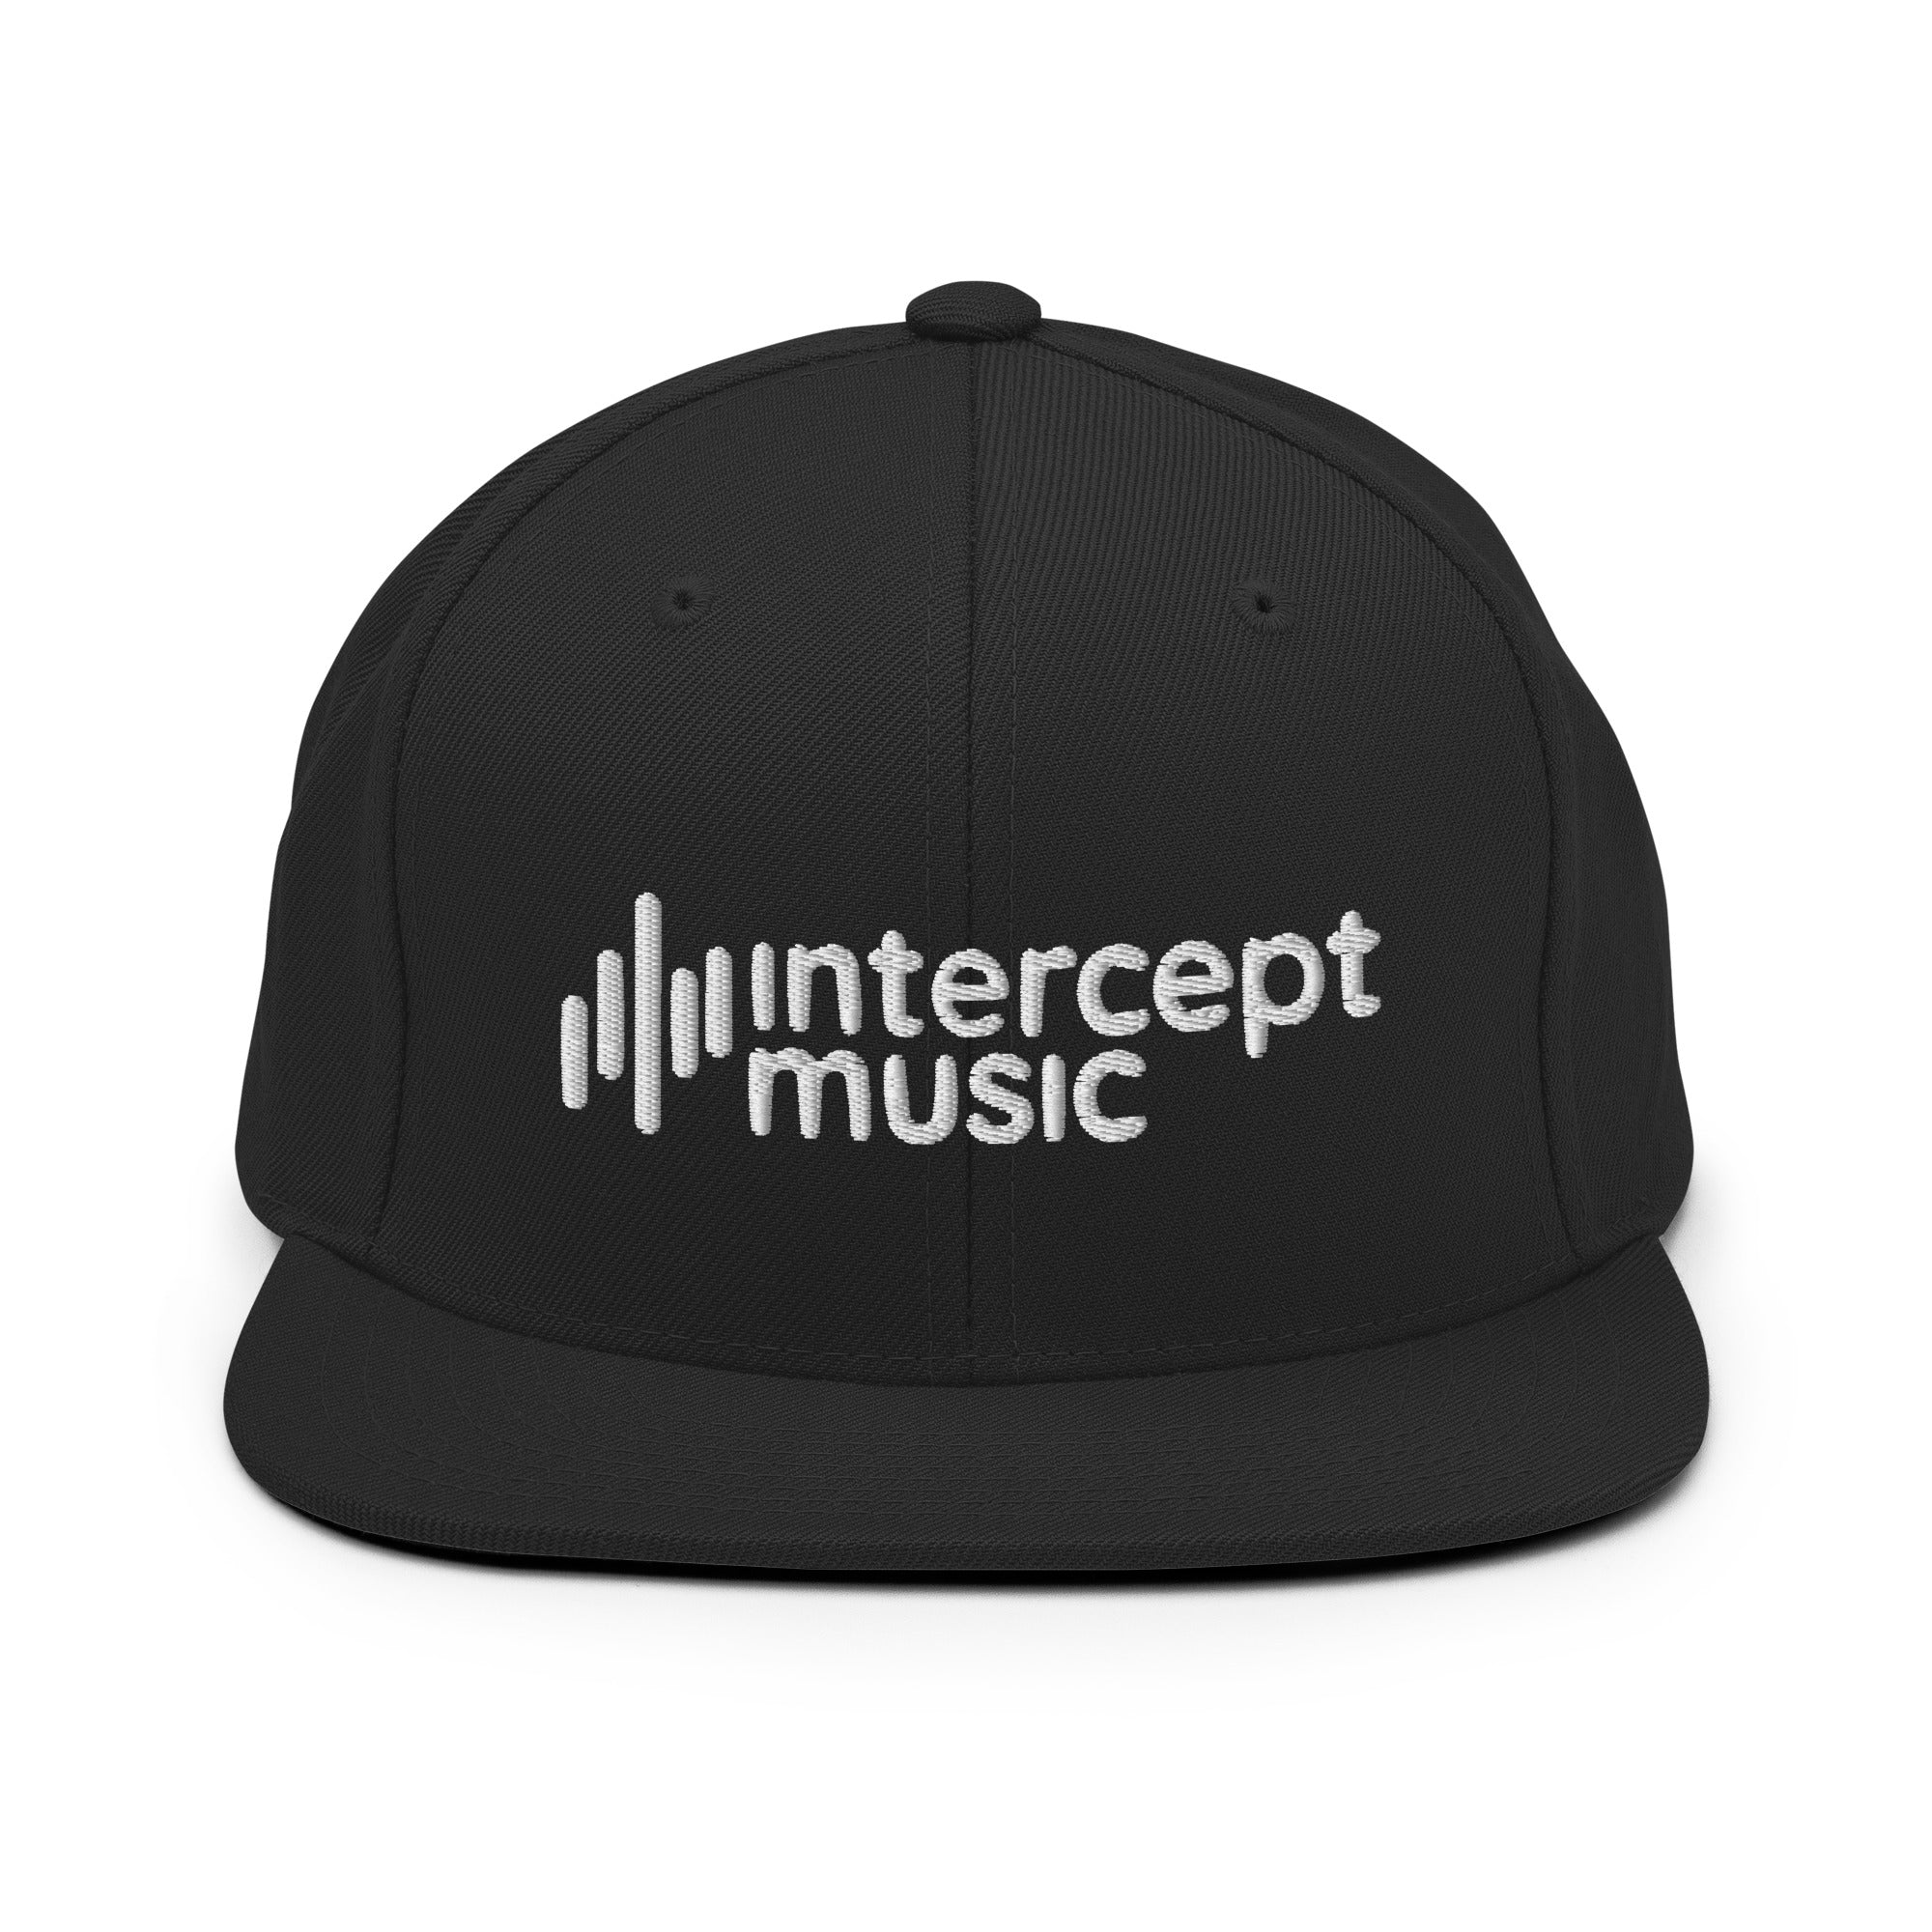 Intercept Music - Snapback Hat